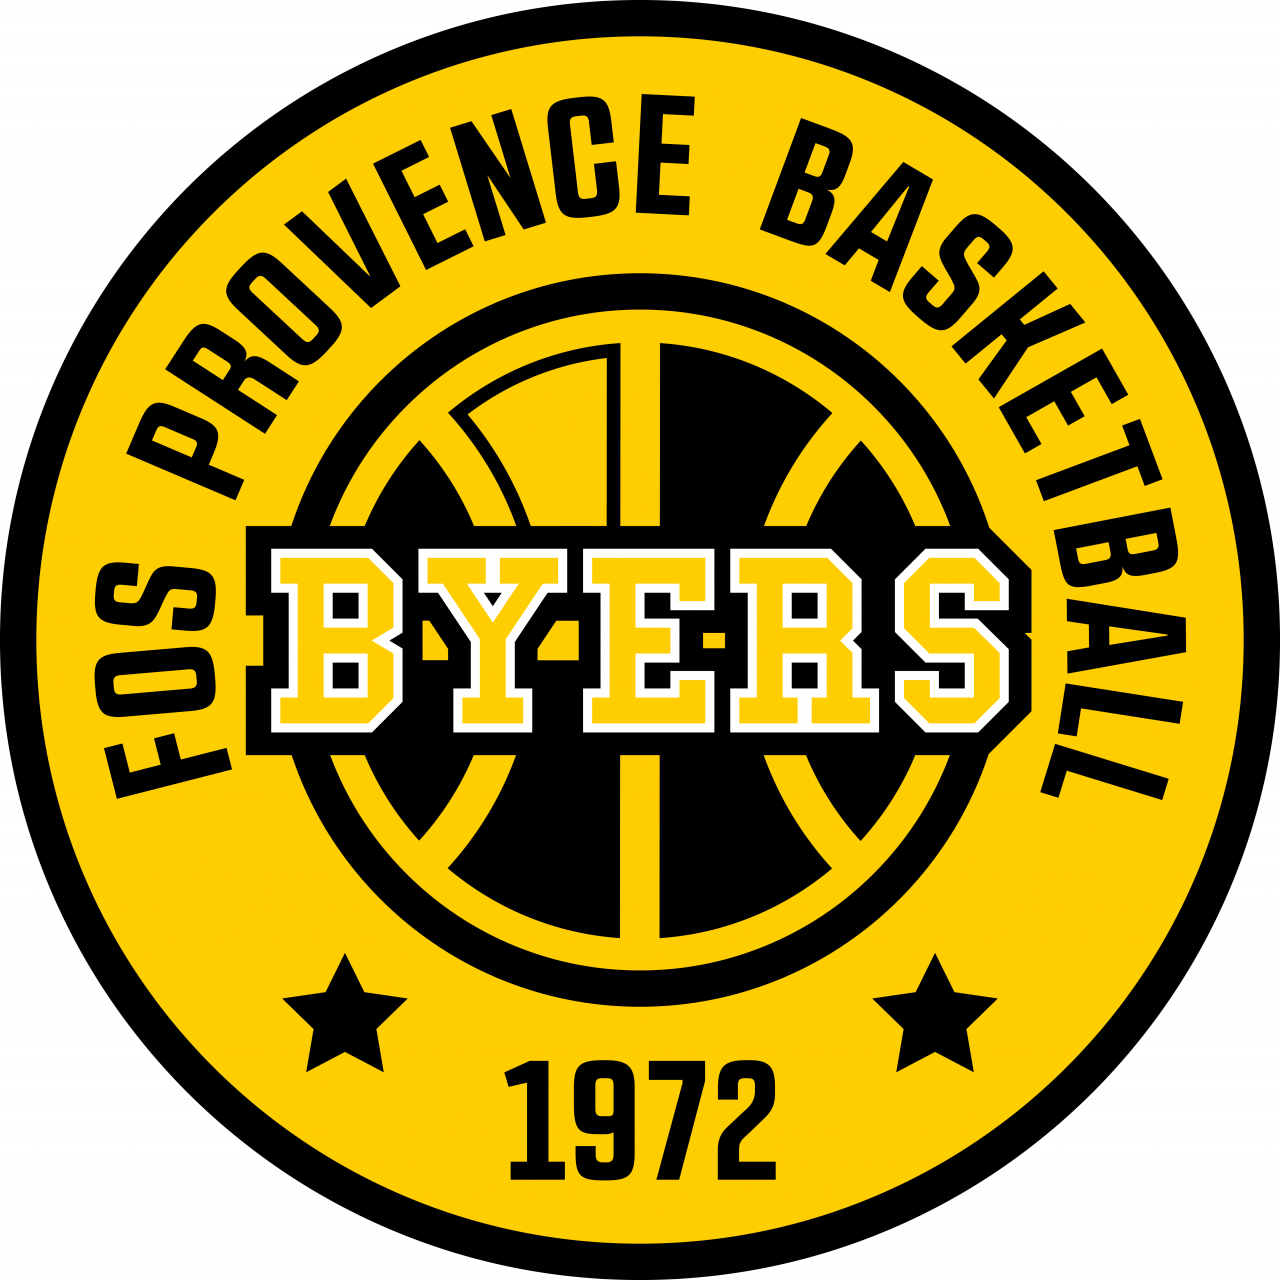 Fos Provence Basket